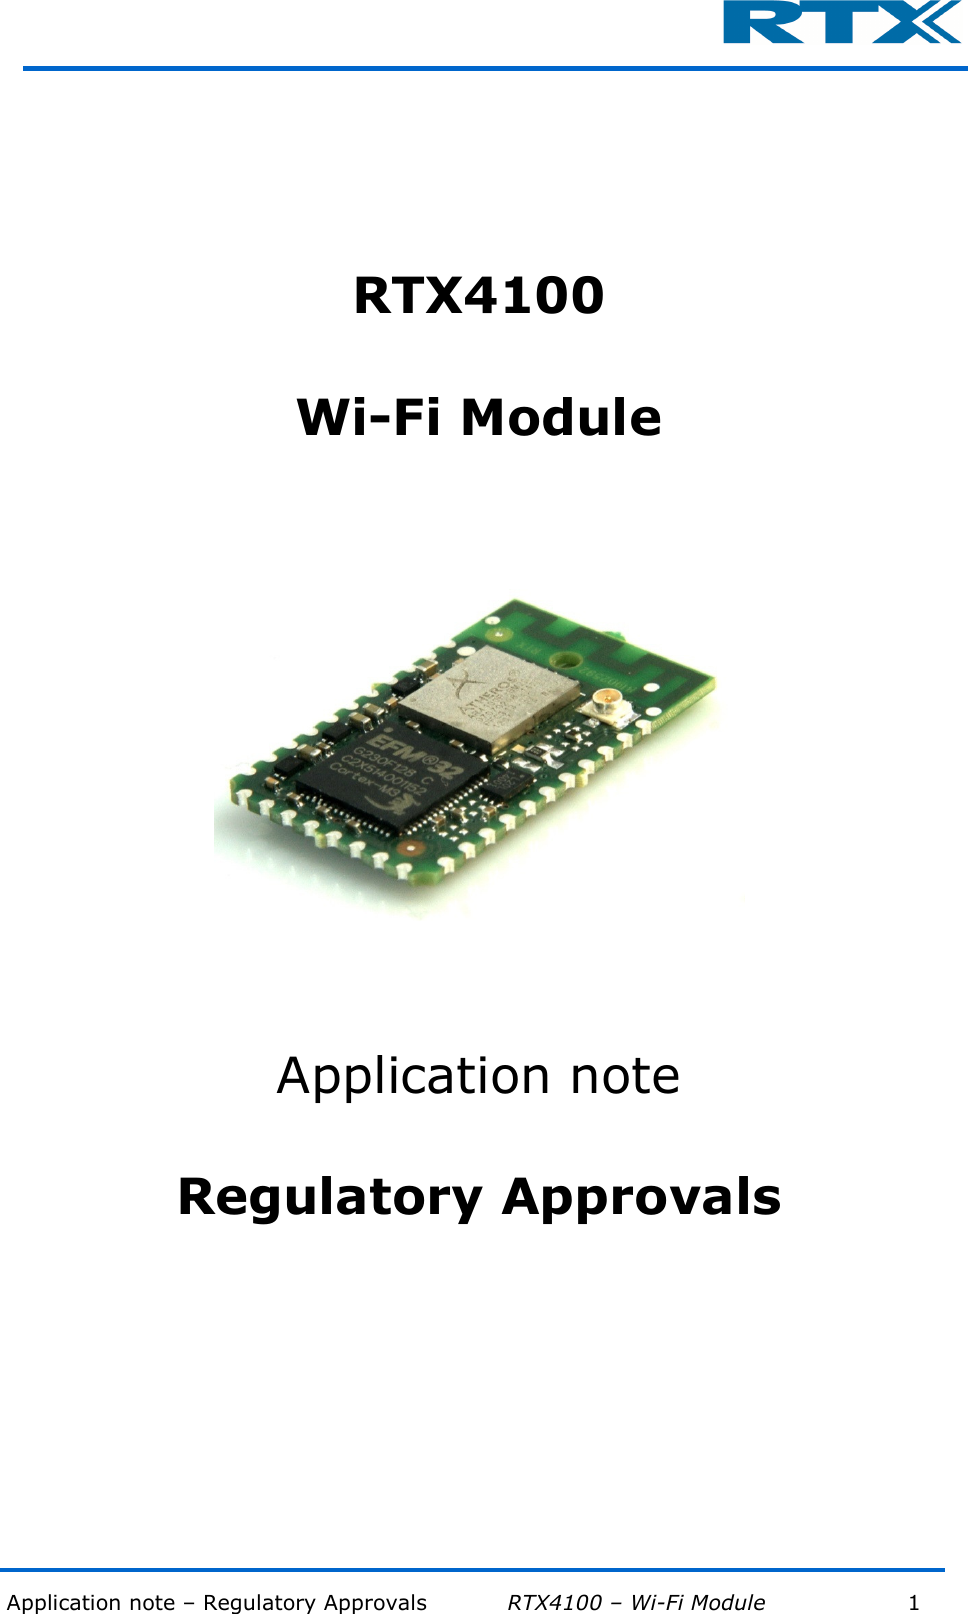  Application note – Regulatory Approvals           RTX4100 – Wi-Fi Module            1            RTX4100  Wi-Fi Module      Application note  Regulatory Approvals        